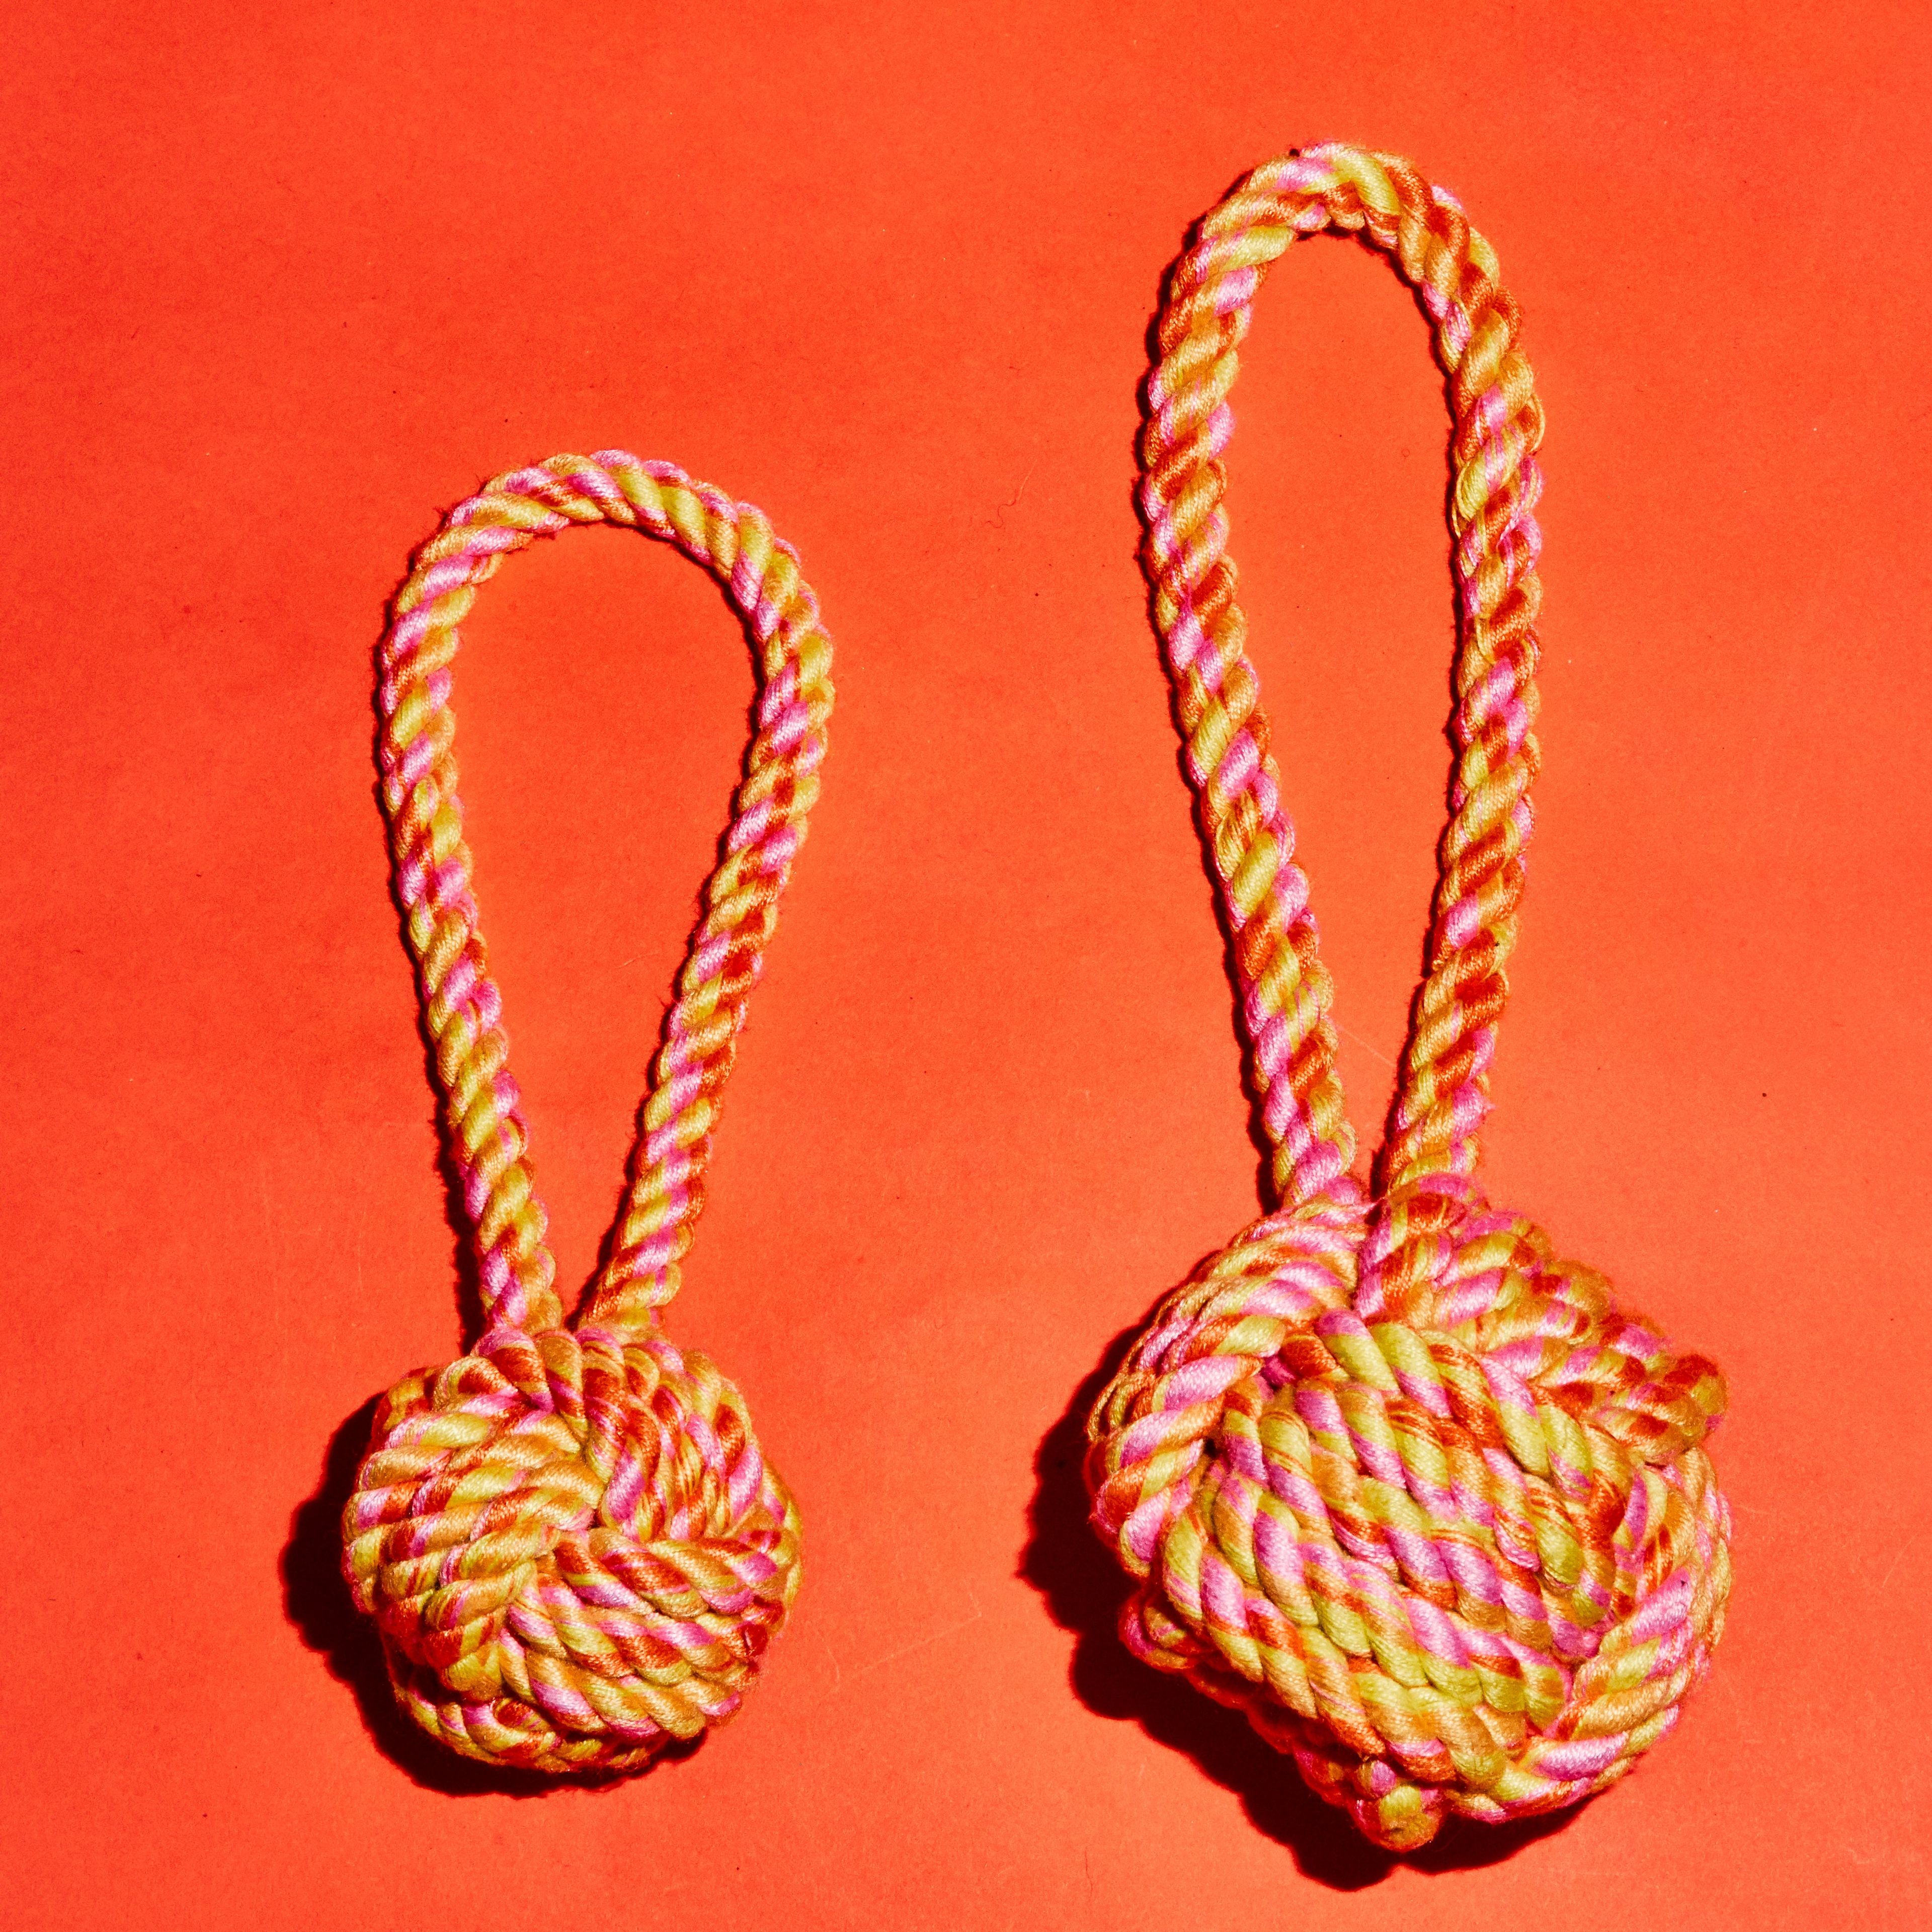 Rope Knot Toy / Neon Pink/Orange/Yellow